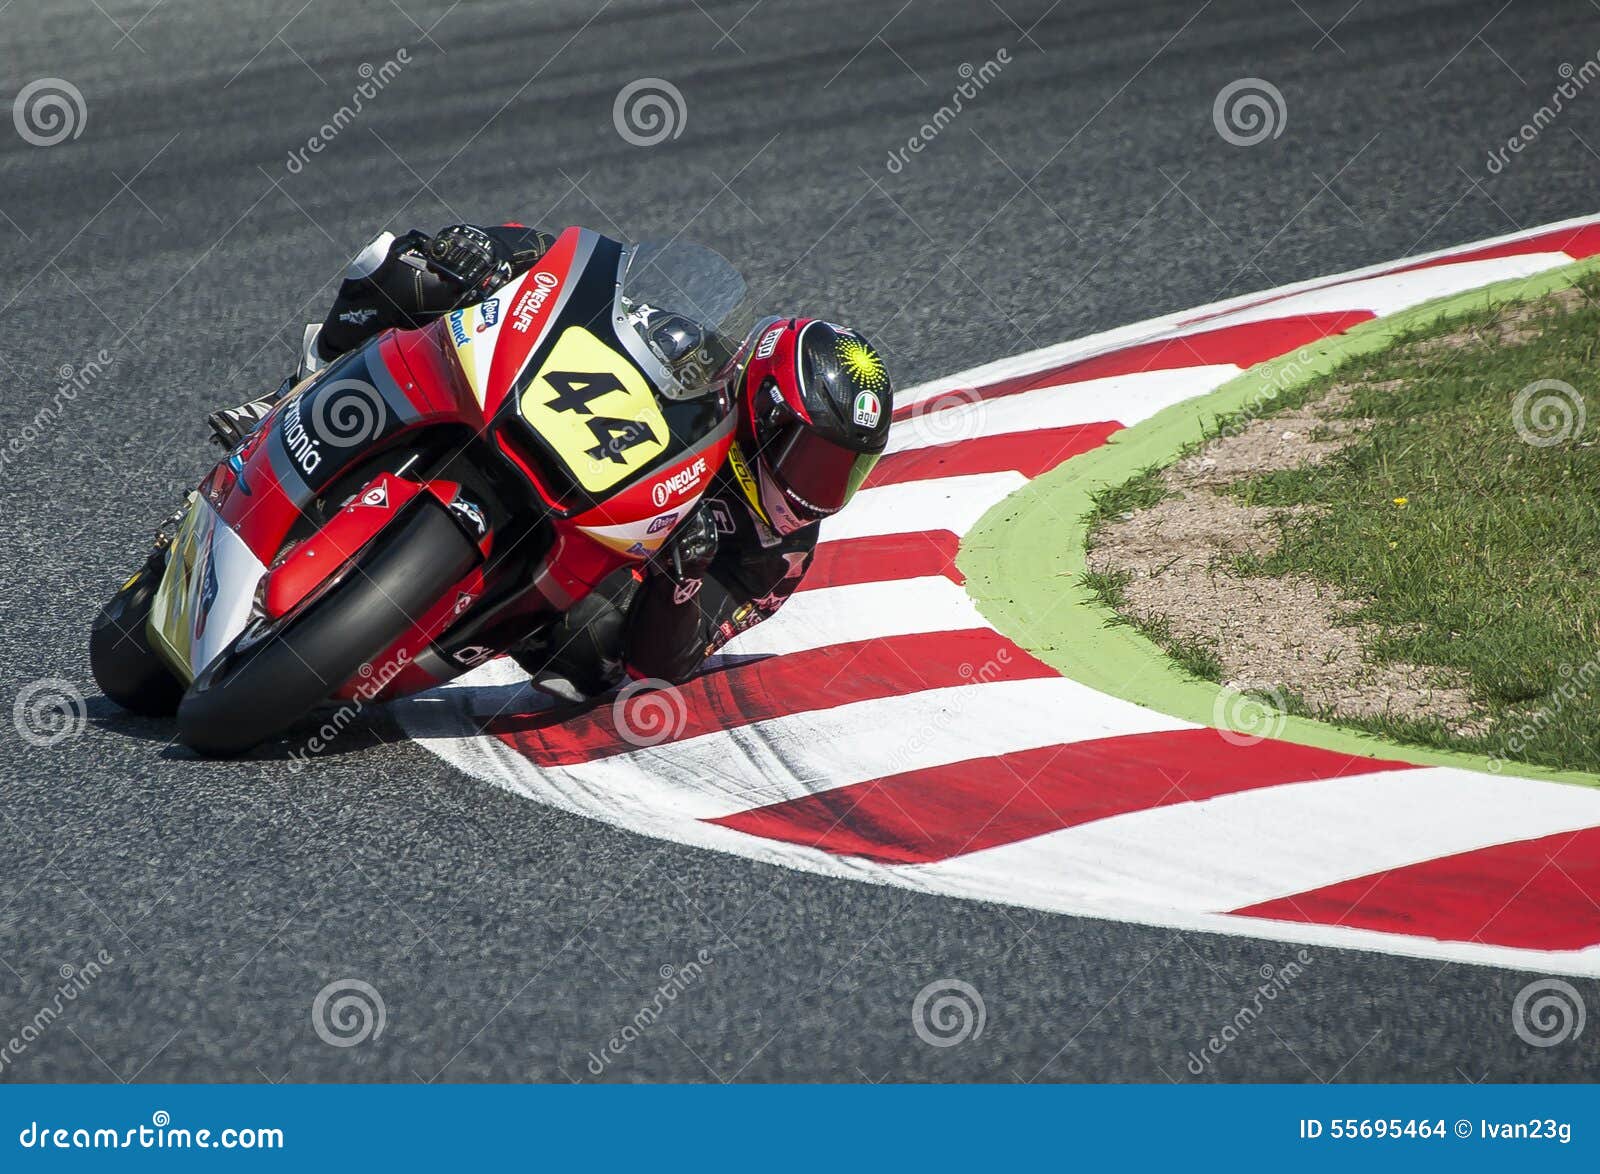 fim-cev-repsol-european-championship-moto-rider-steven-odendaal-celebrates-june-circuit-de-barcelona-catalunya-55695464.jpg